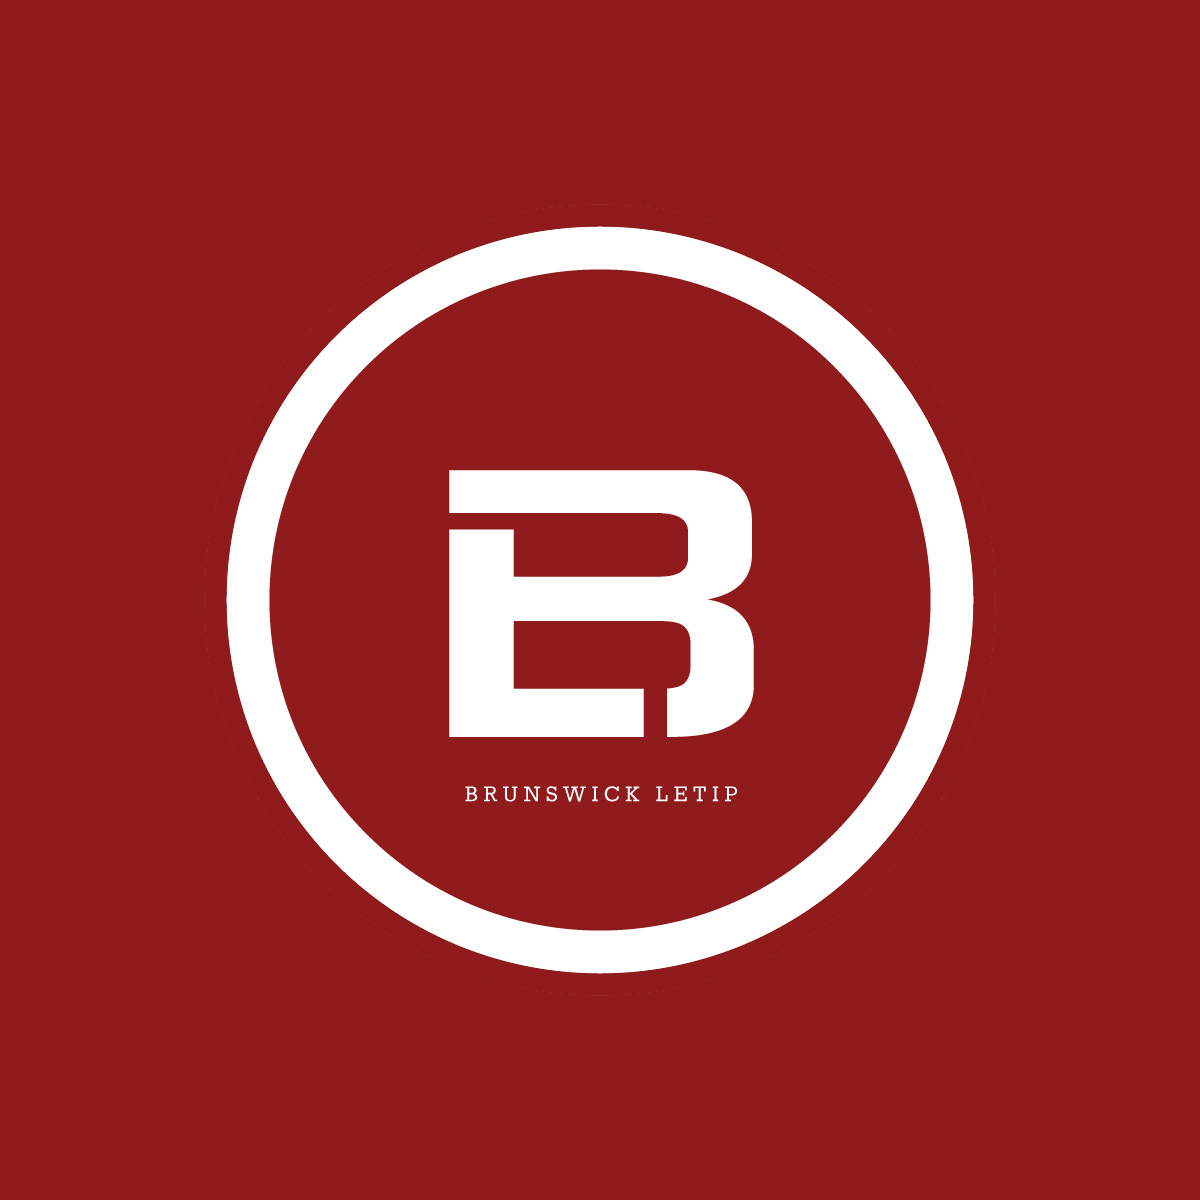 bunswick letip logo